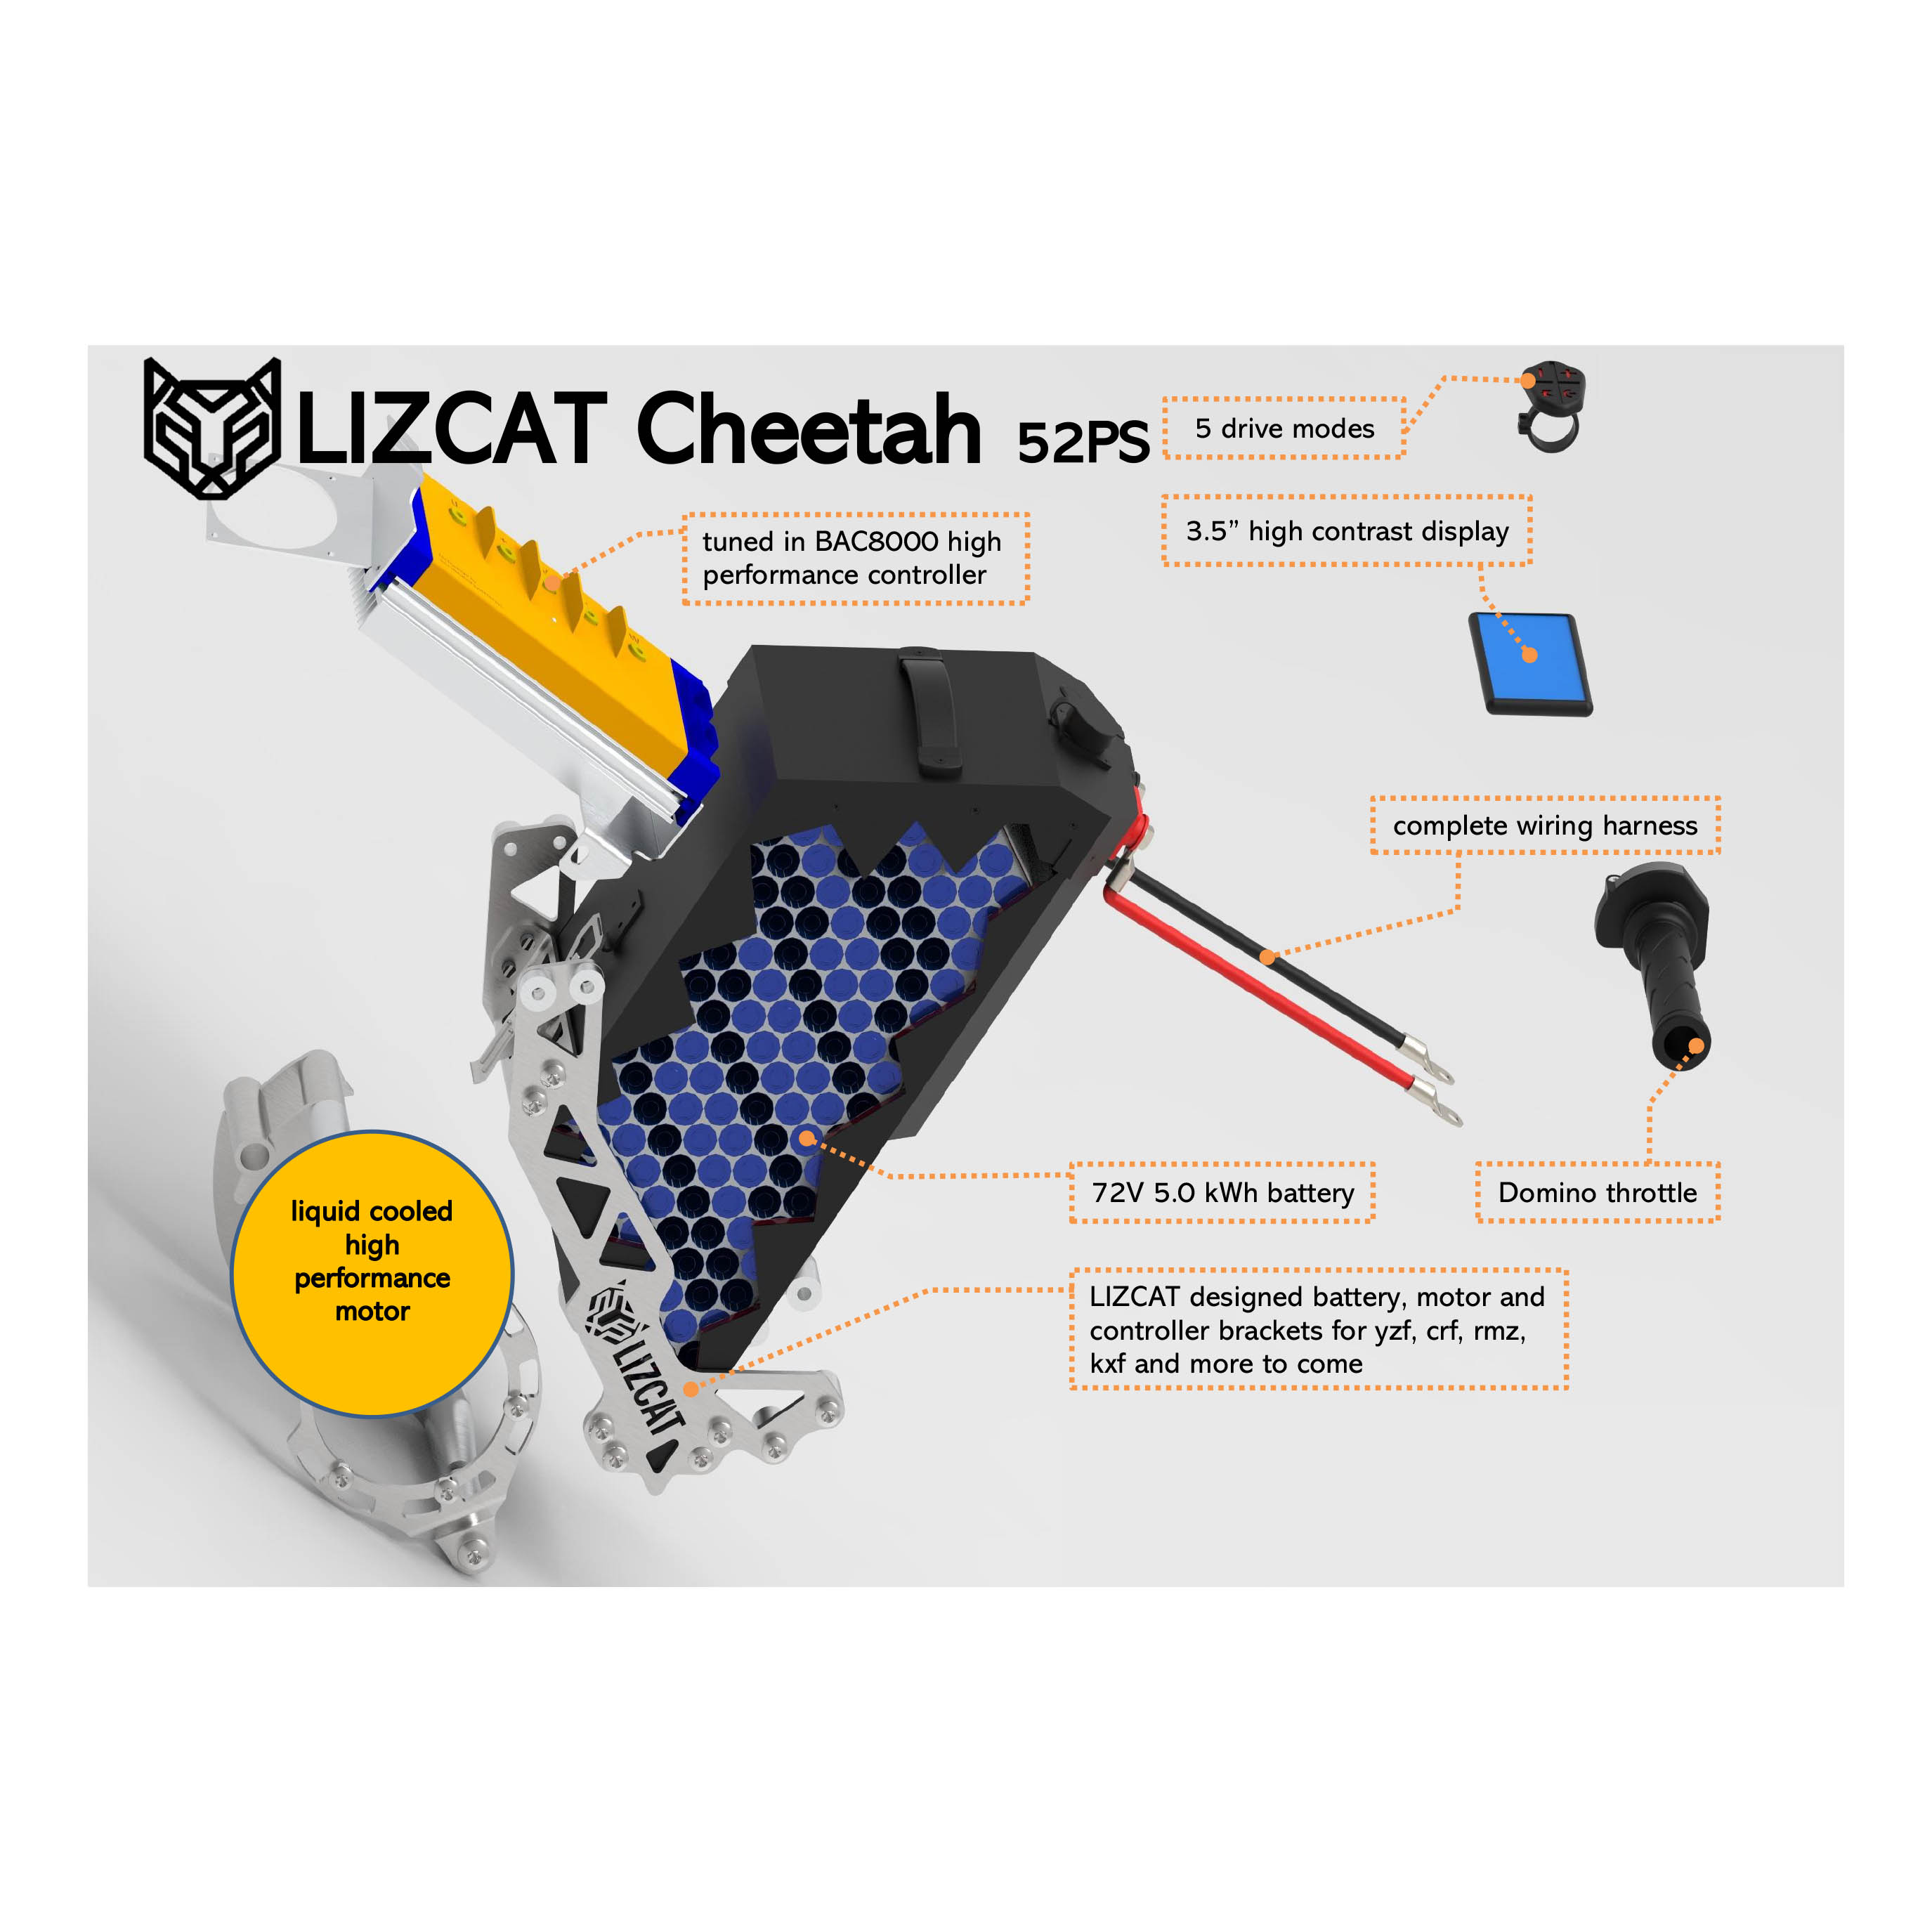 Lizcat - Cheetah, made in Switzerland